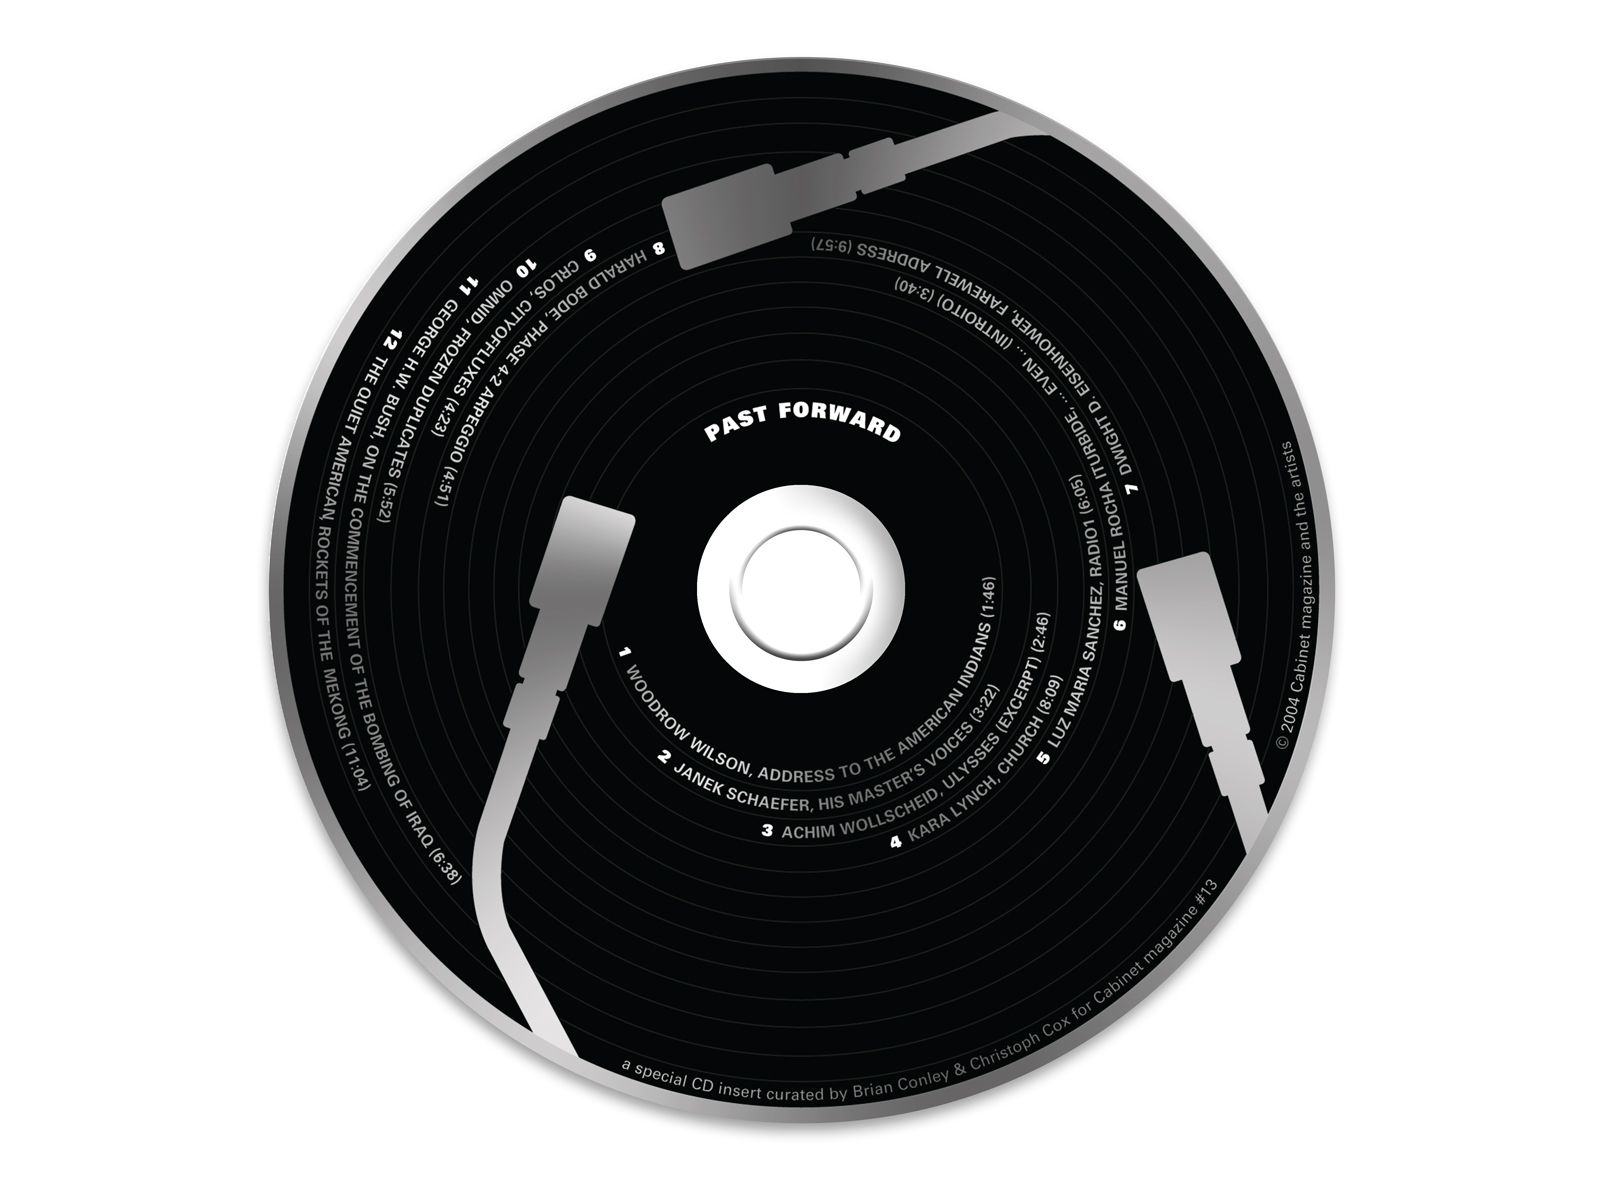 CD cover, listing its tracks.